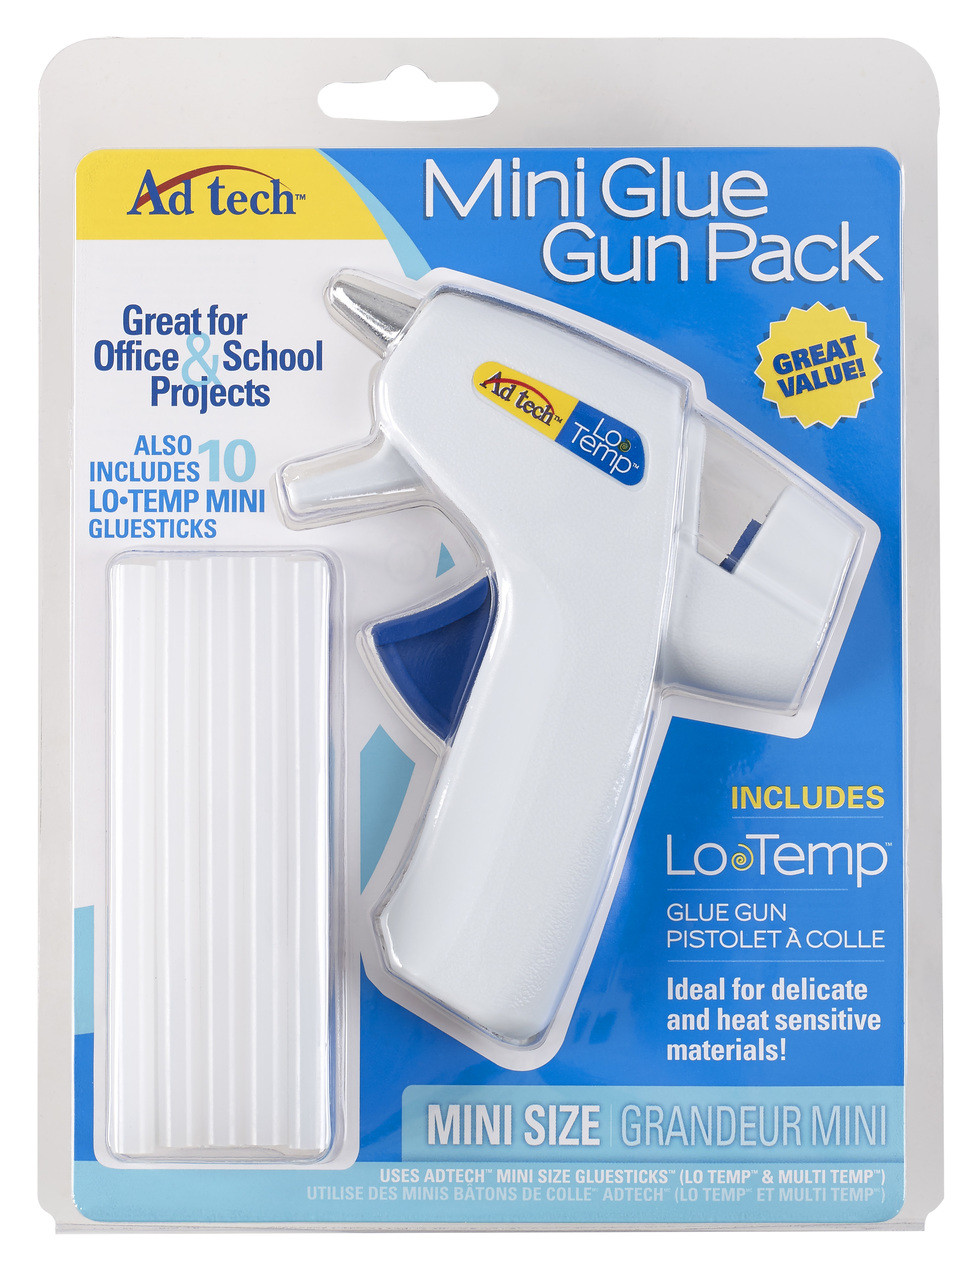 Adhesive Technologies Low Temperature Mini Glue Gun-From